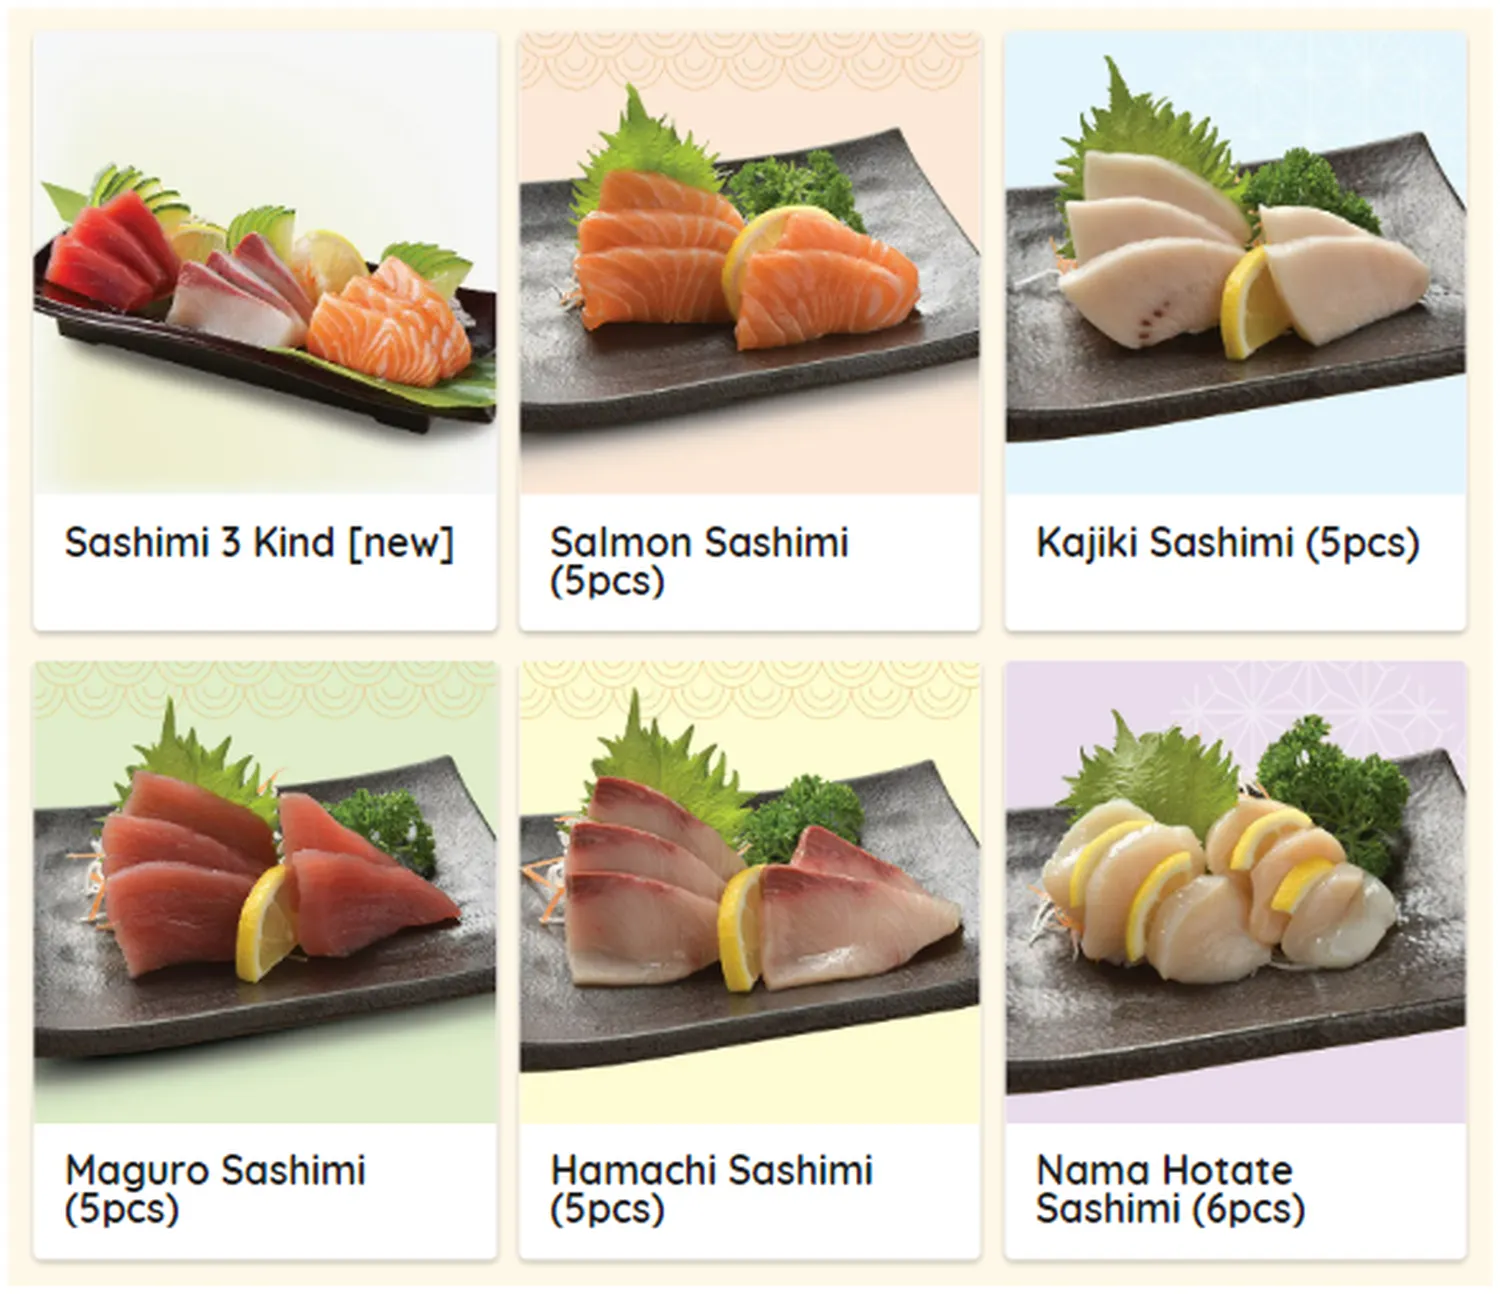 ichiban sushi menu singapore sashimi 2